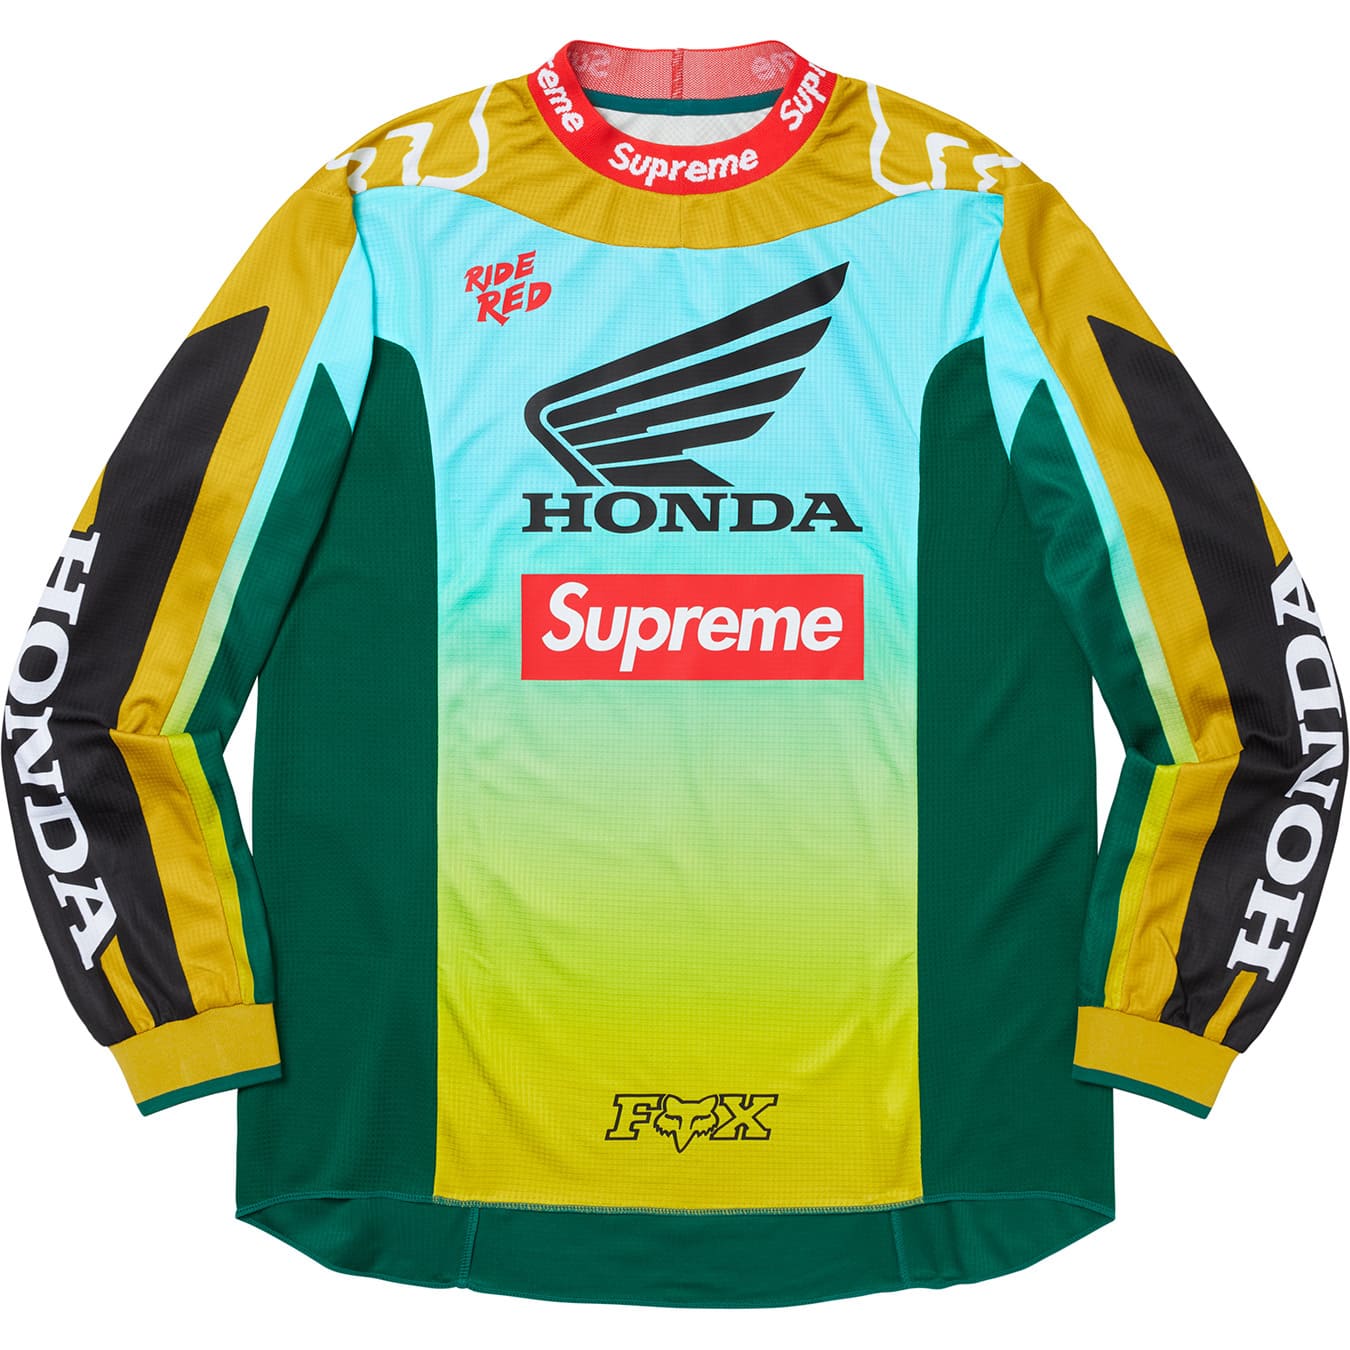 Supreme®/Honda®/Fox® Racing Moto Jersey Top